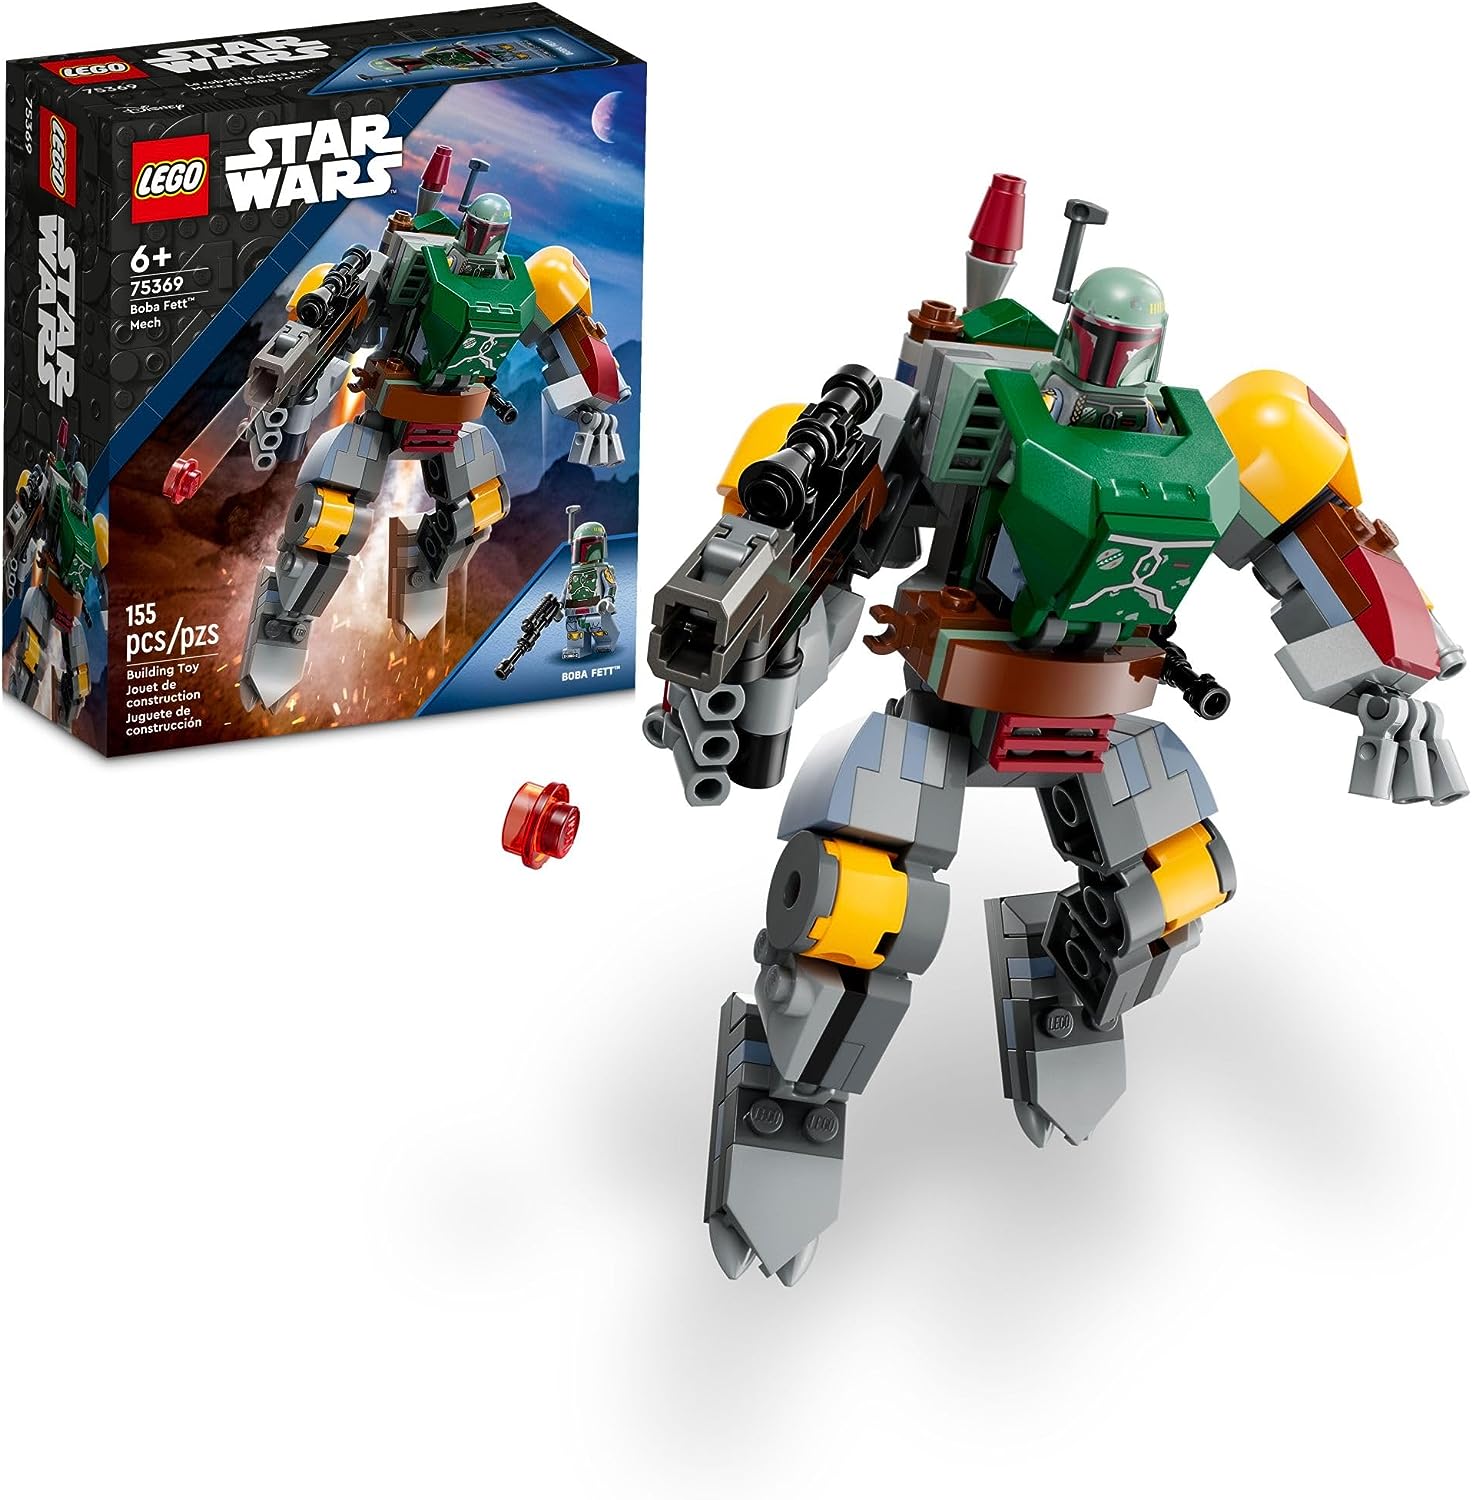 LEGO Star Wars Boba Fett Mech Set (75369)